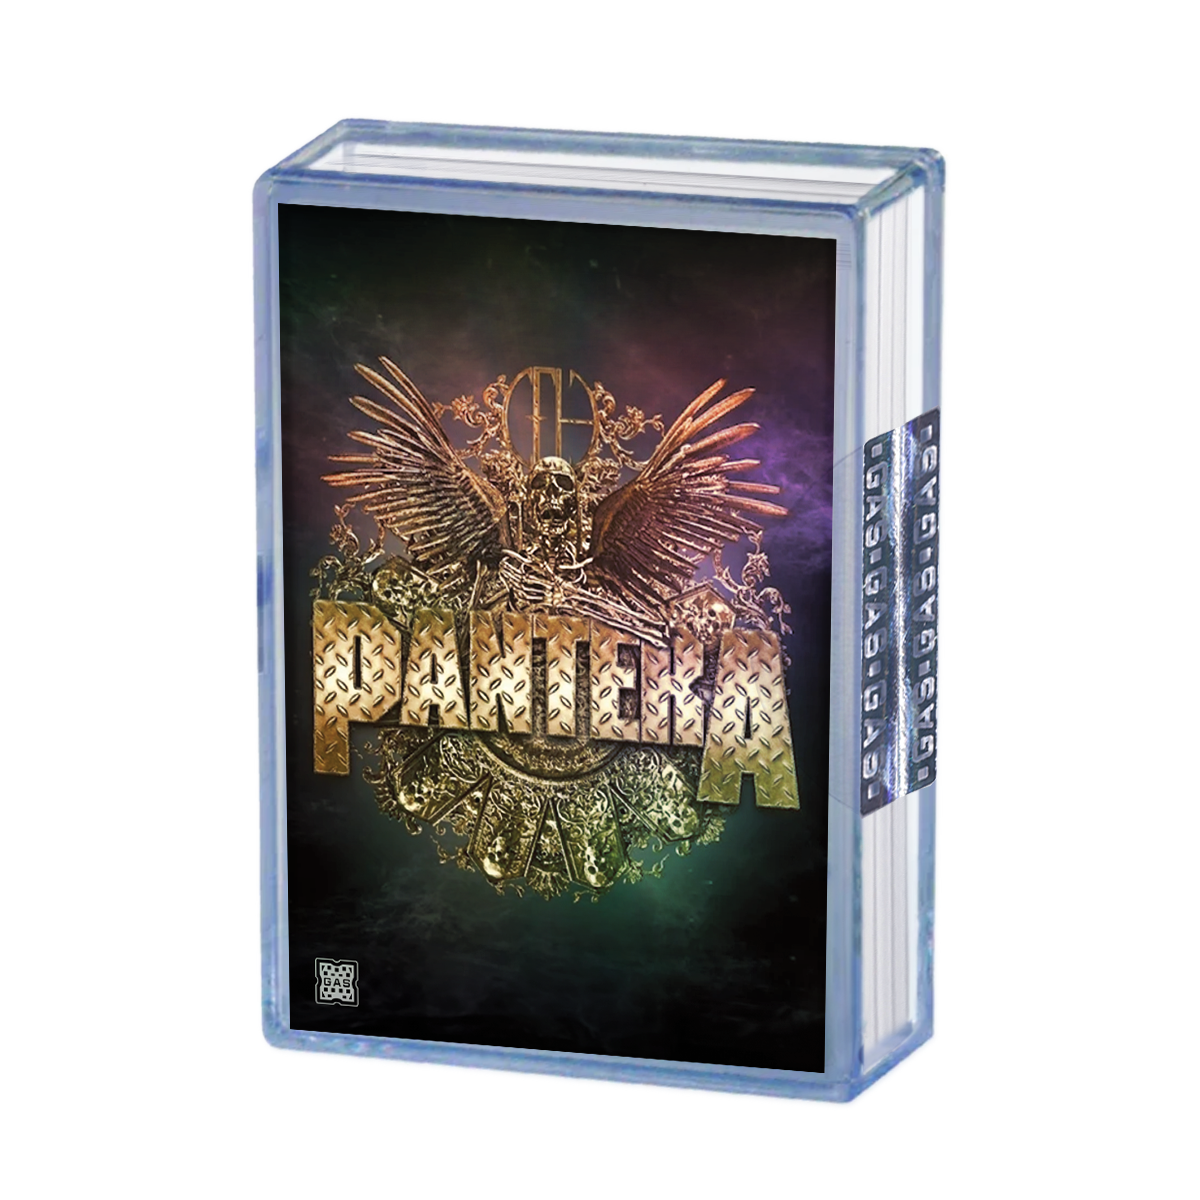 Pantera 2024 Tour Foil Trading Card Set